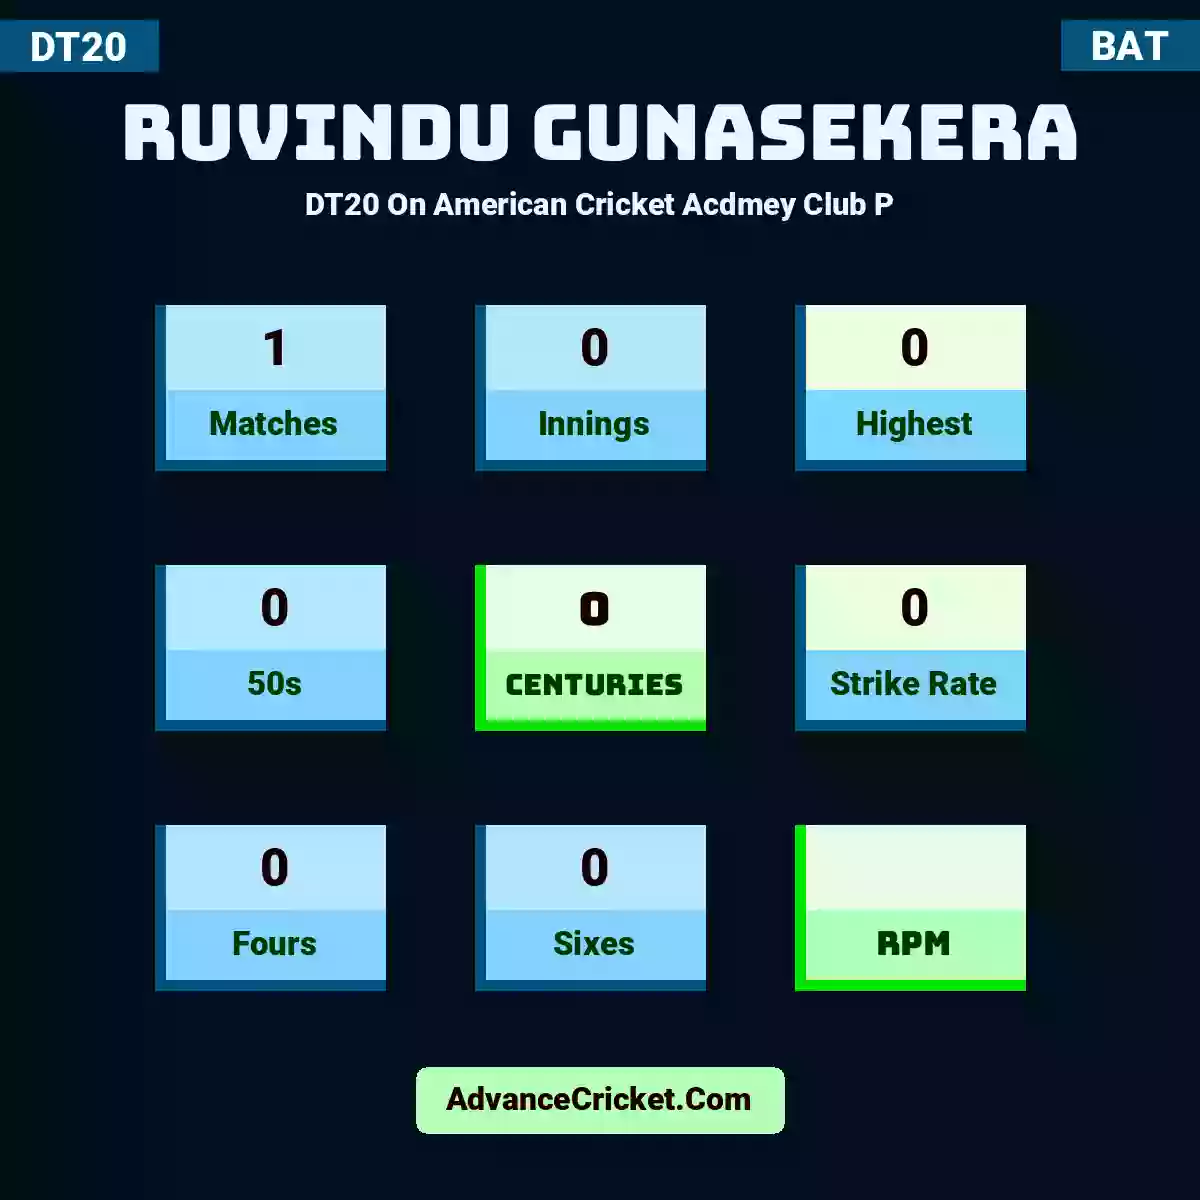 Ruvindu Gunasekera DT20  On American Cricket Acdmey Club P, Ruvindu Gunasekera played 1 matches, scored 0 runs as highest, 0 half-centuries, and 0 centuries, with a strike rate of 0. R.Gunasekera hit 0 fours and 0 sixes.